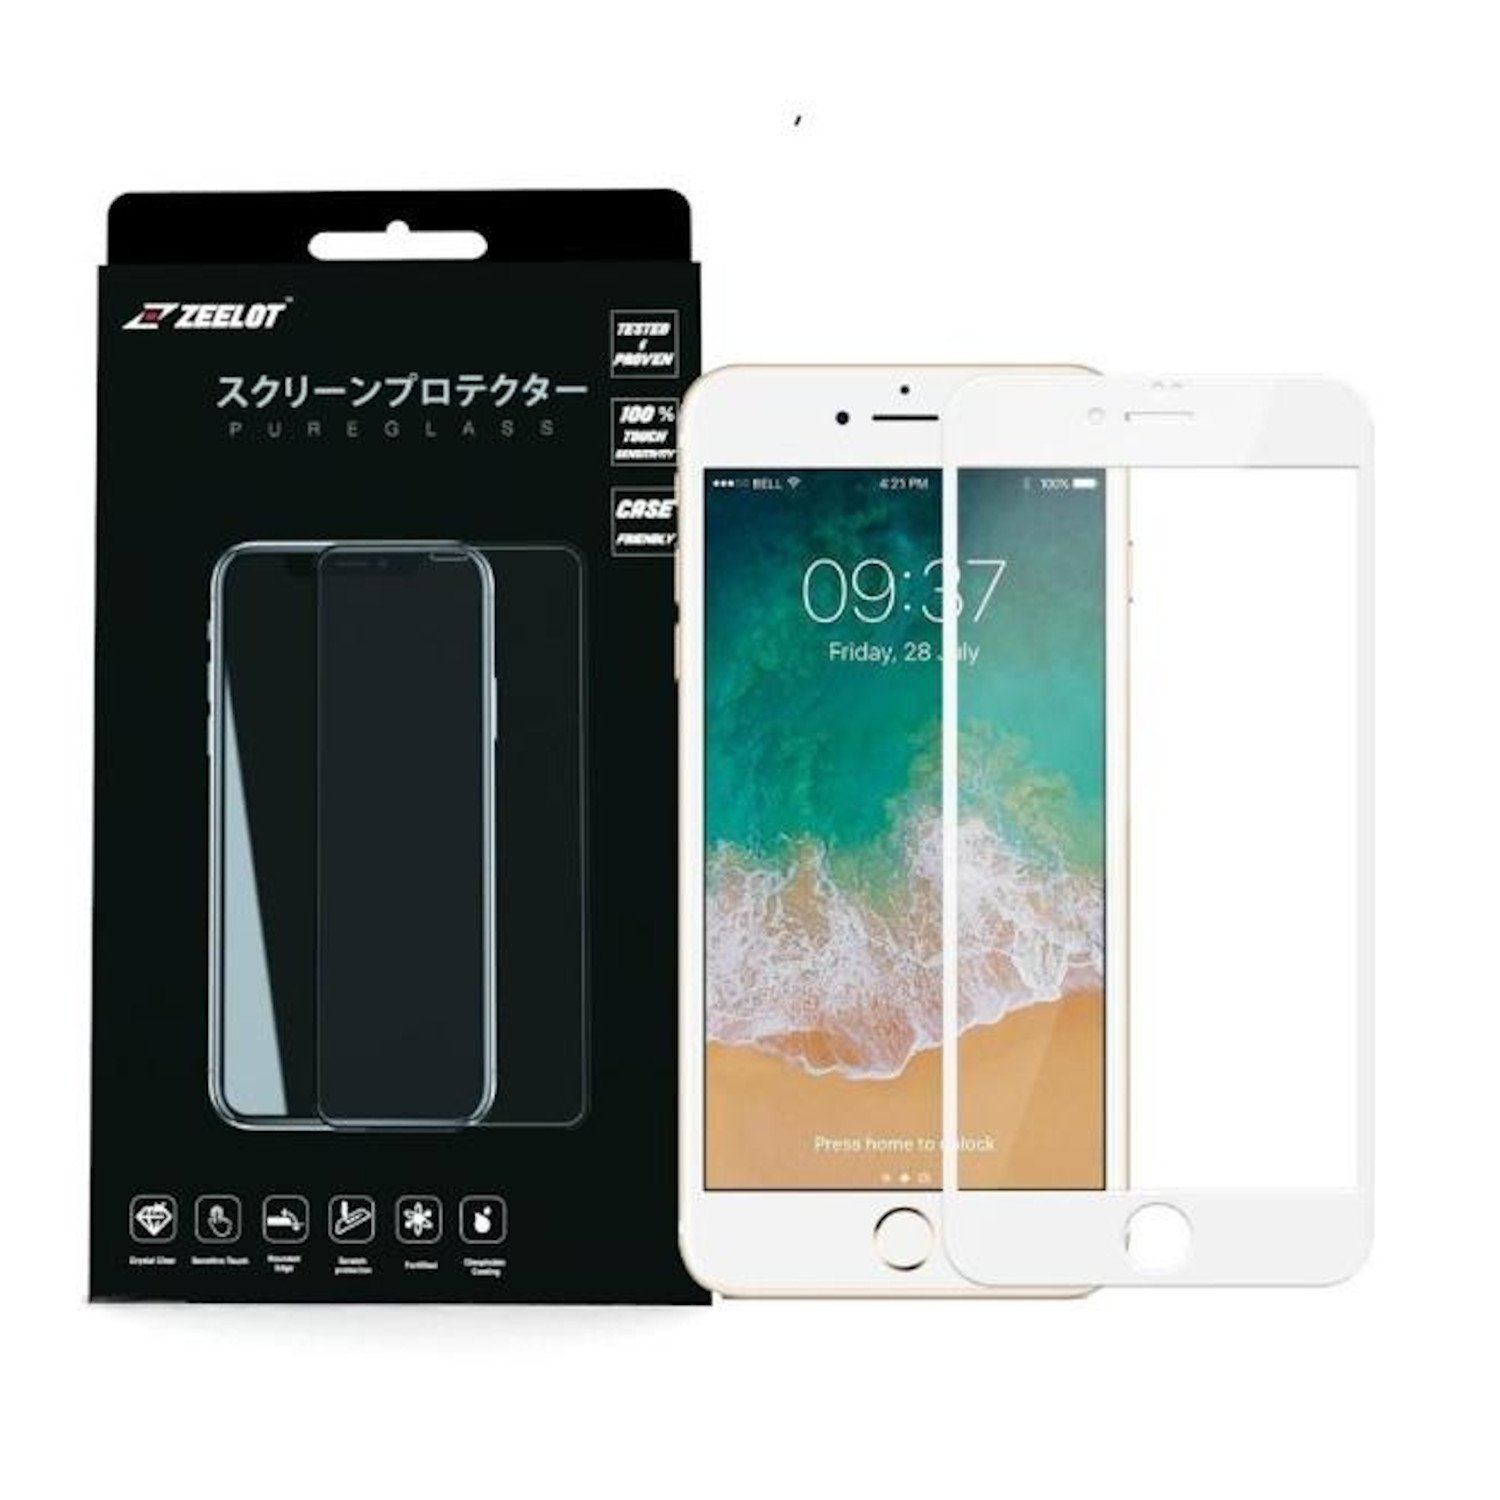 ZEELOT PureGlass 2.5D Tempered Glass Screen Protector for iPhone 8/7 4.7" (2017/2016), White Tempered Glass ZEELOT 